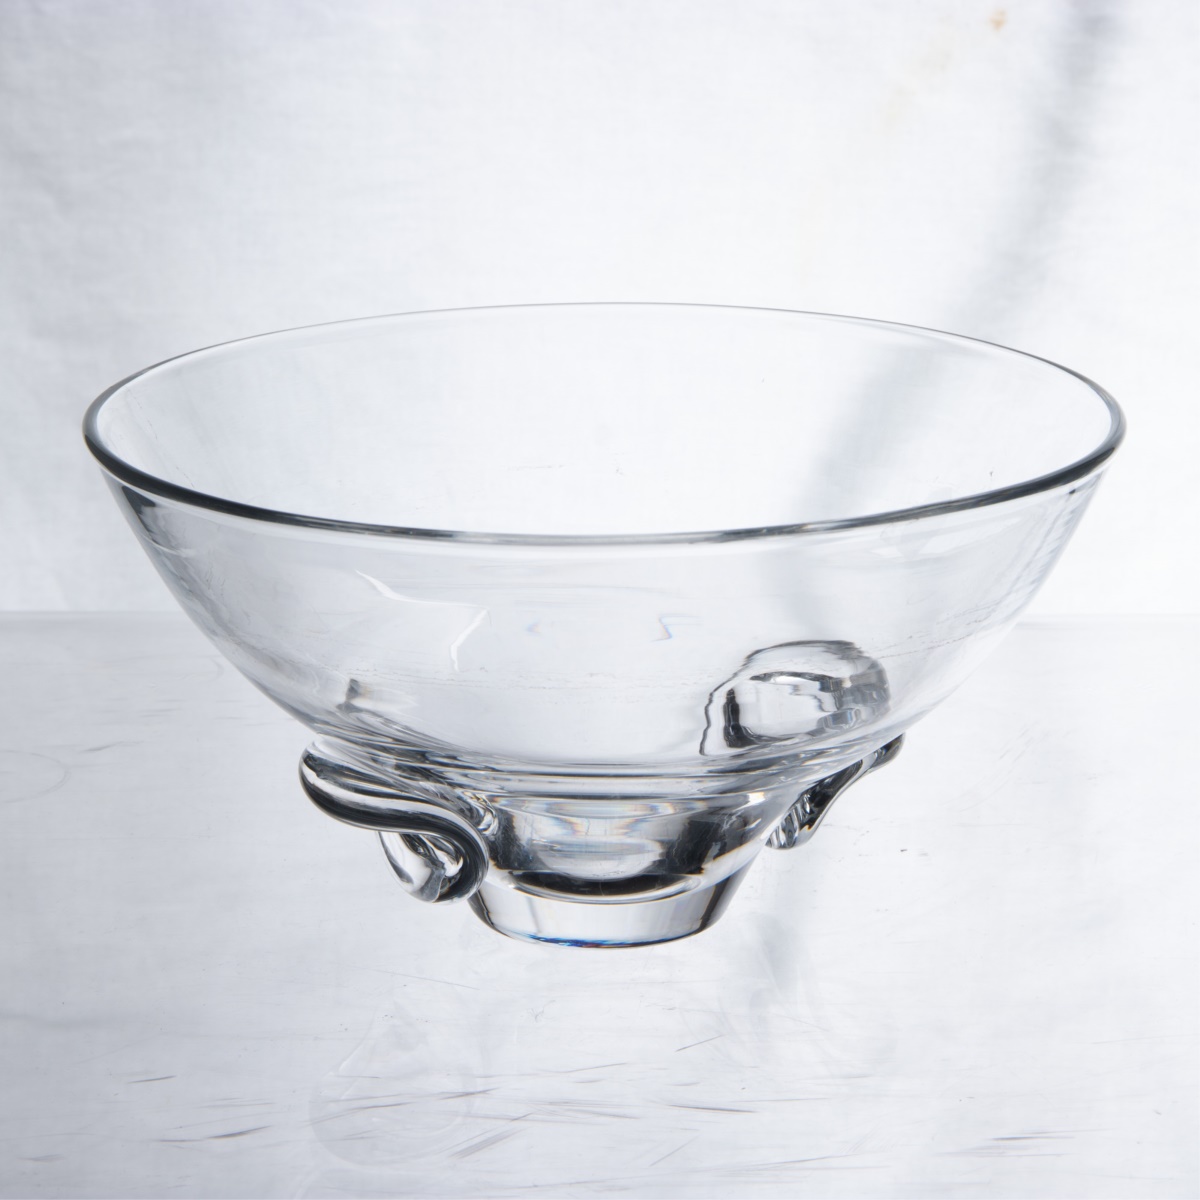 PAIR OF STUBEN GLASS BOWLS - Image 2 of 7